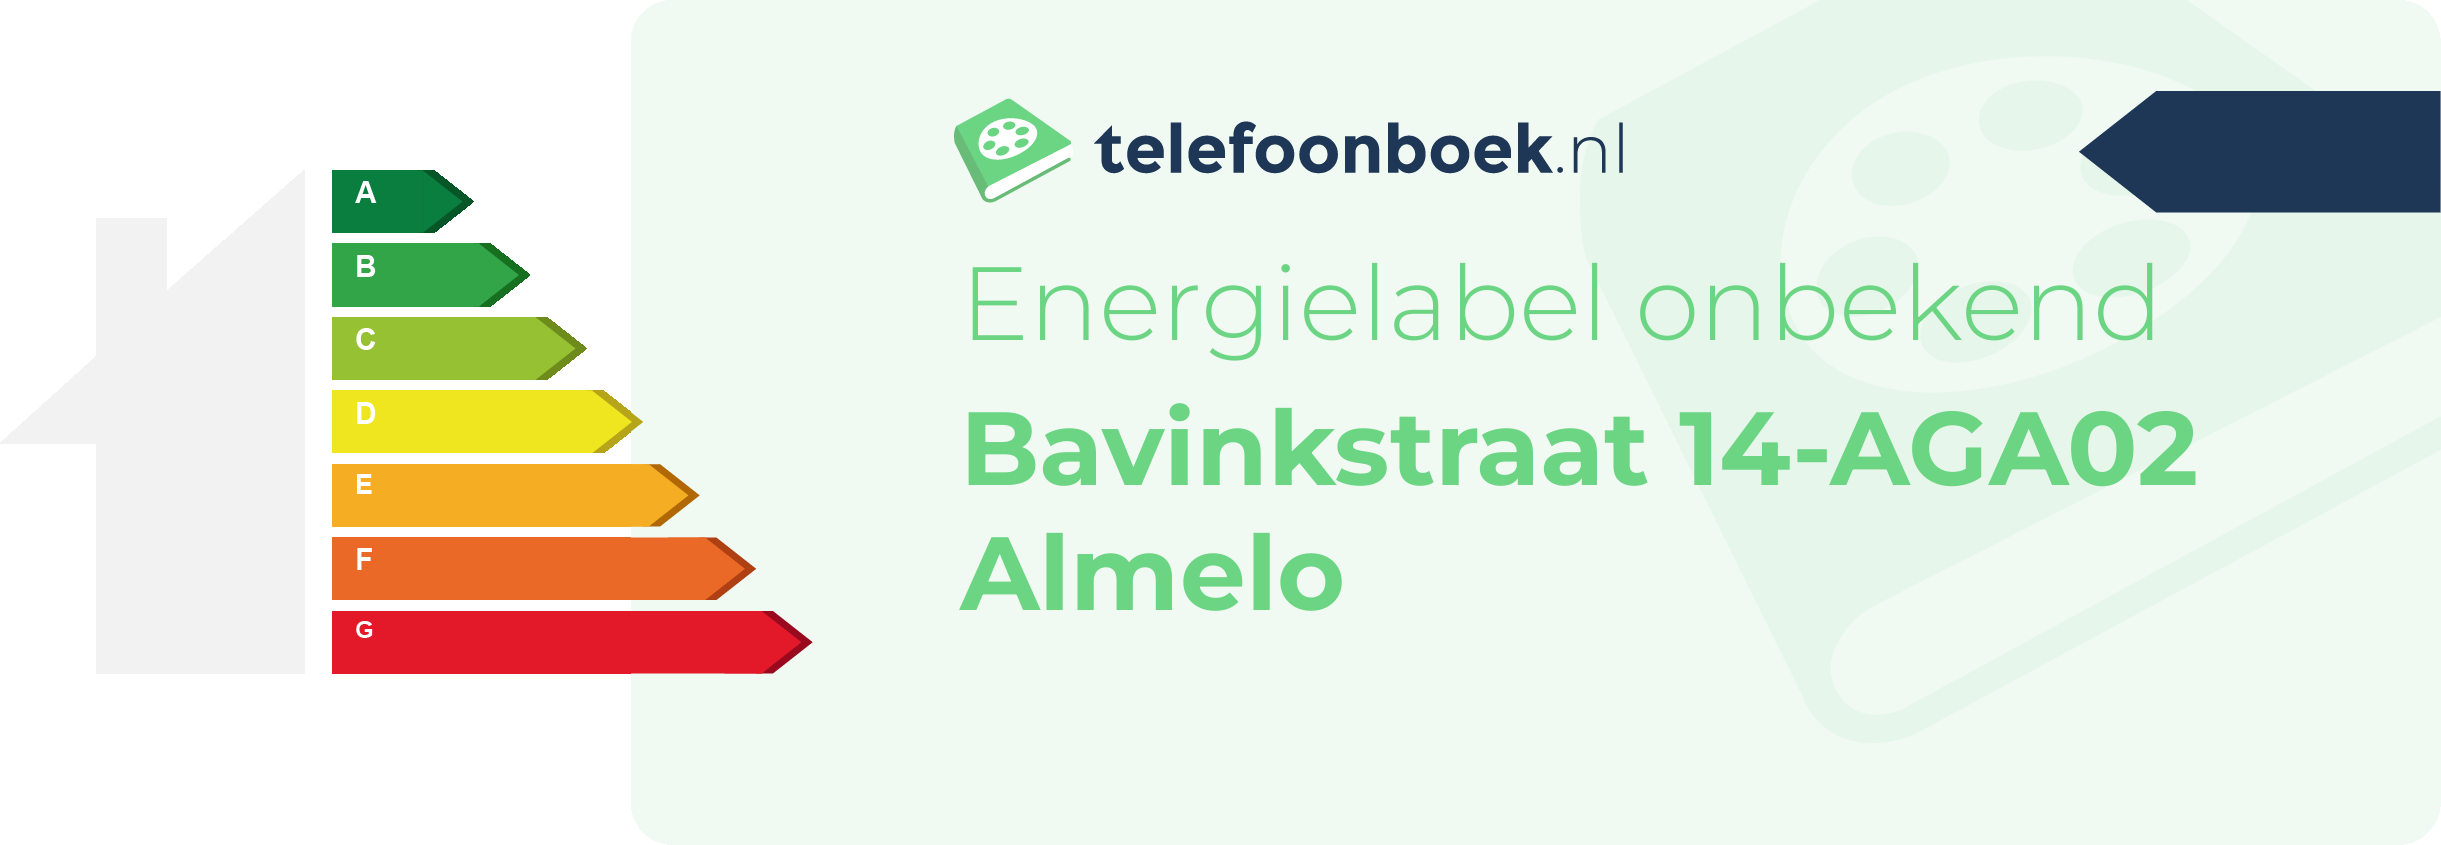 Energielabel Bavinkstraat 14-AGA02 Almelo